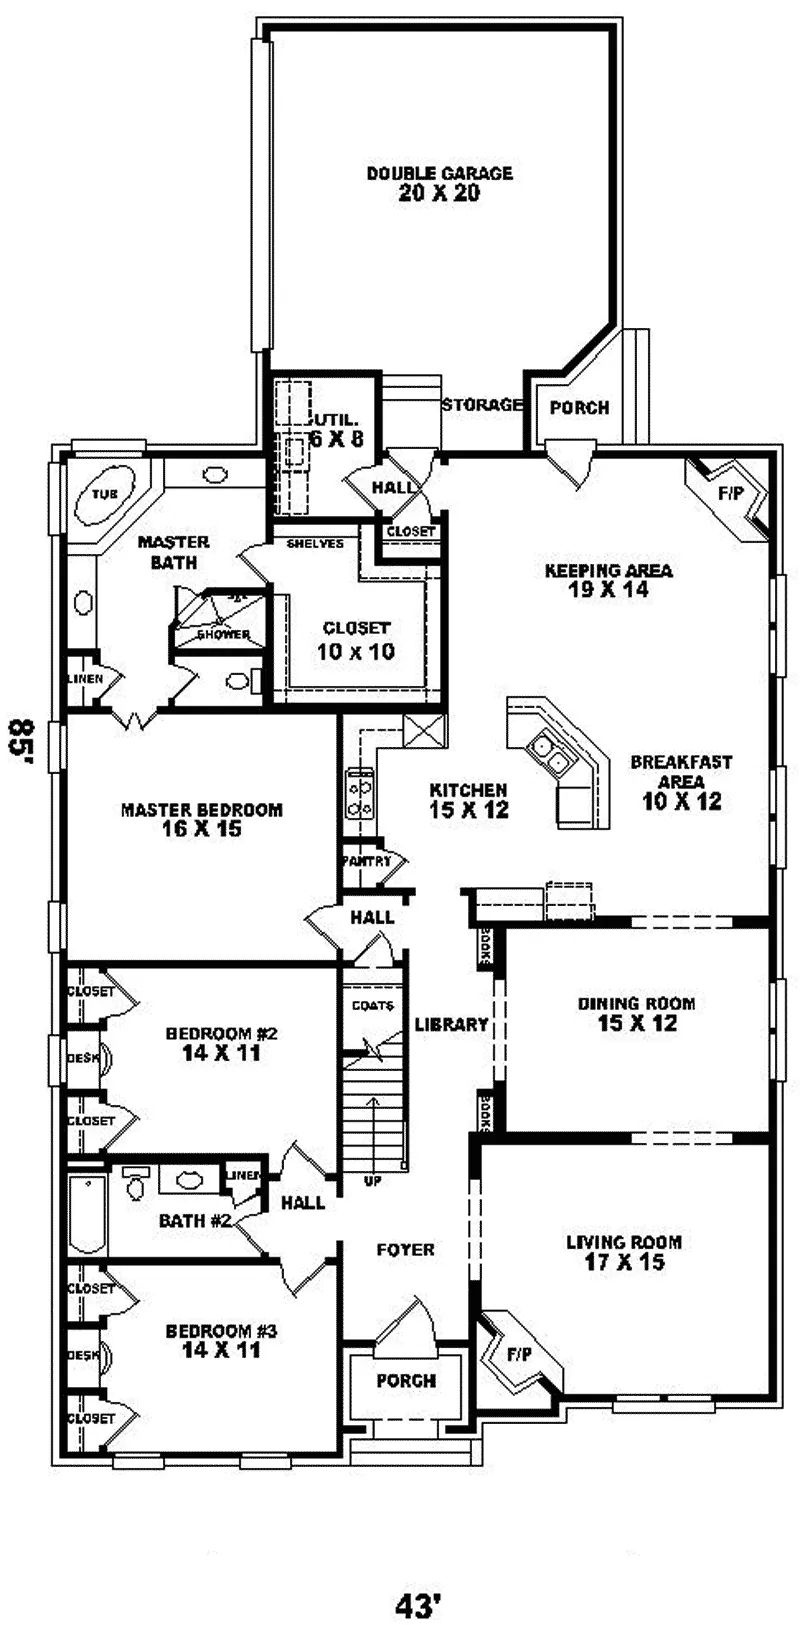 Tudor House Plan First Floor - La Roux Tudor Style Home 087D-0668 - Shop House Plans and More